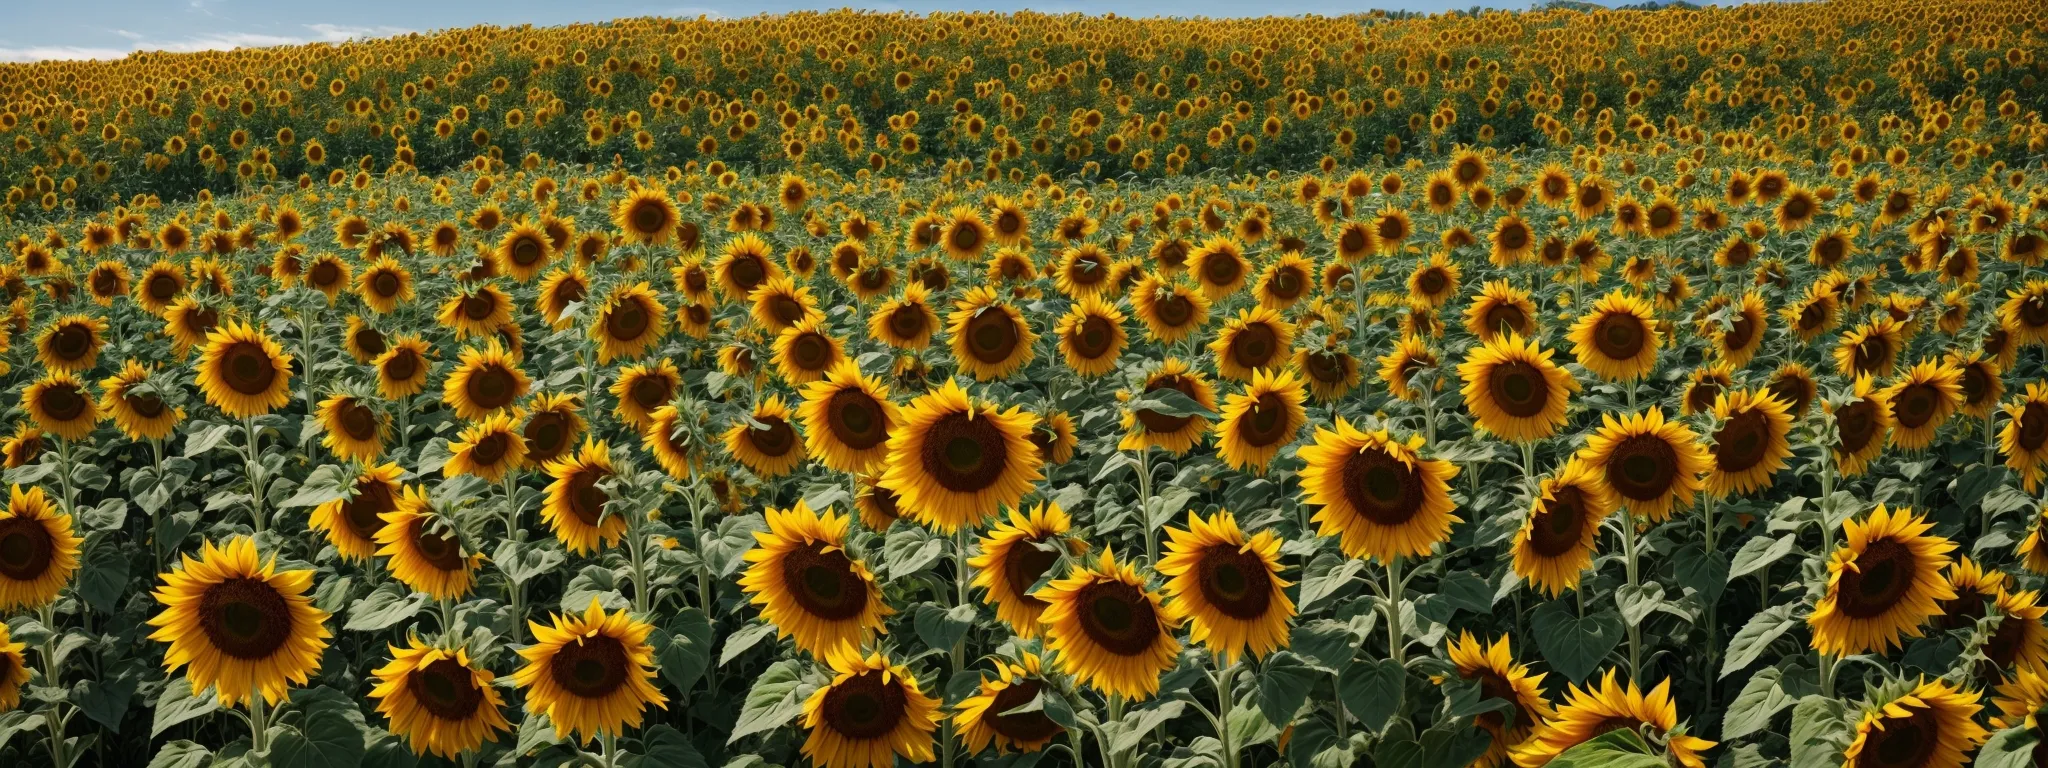 a sunflower field under a clear blue sky.